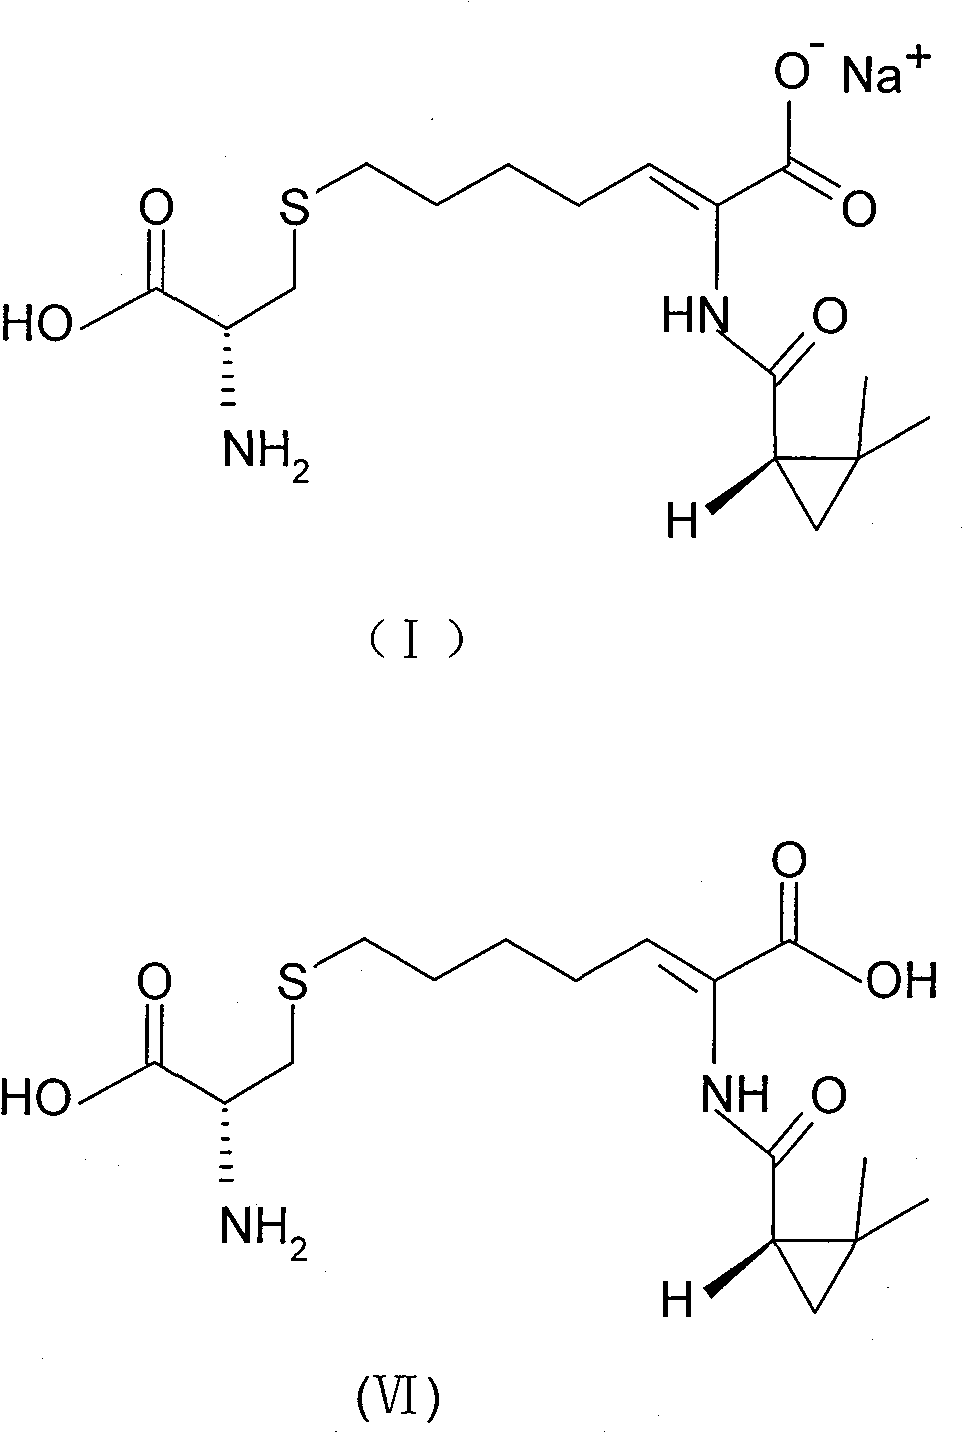 Process for preparing cilastatin sodium